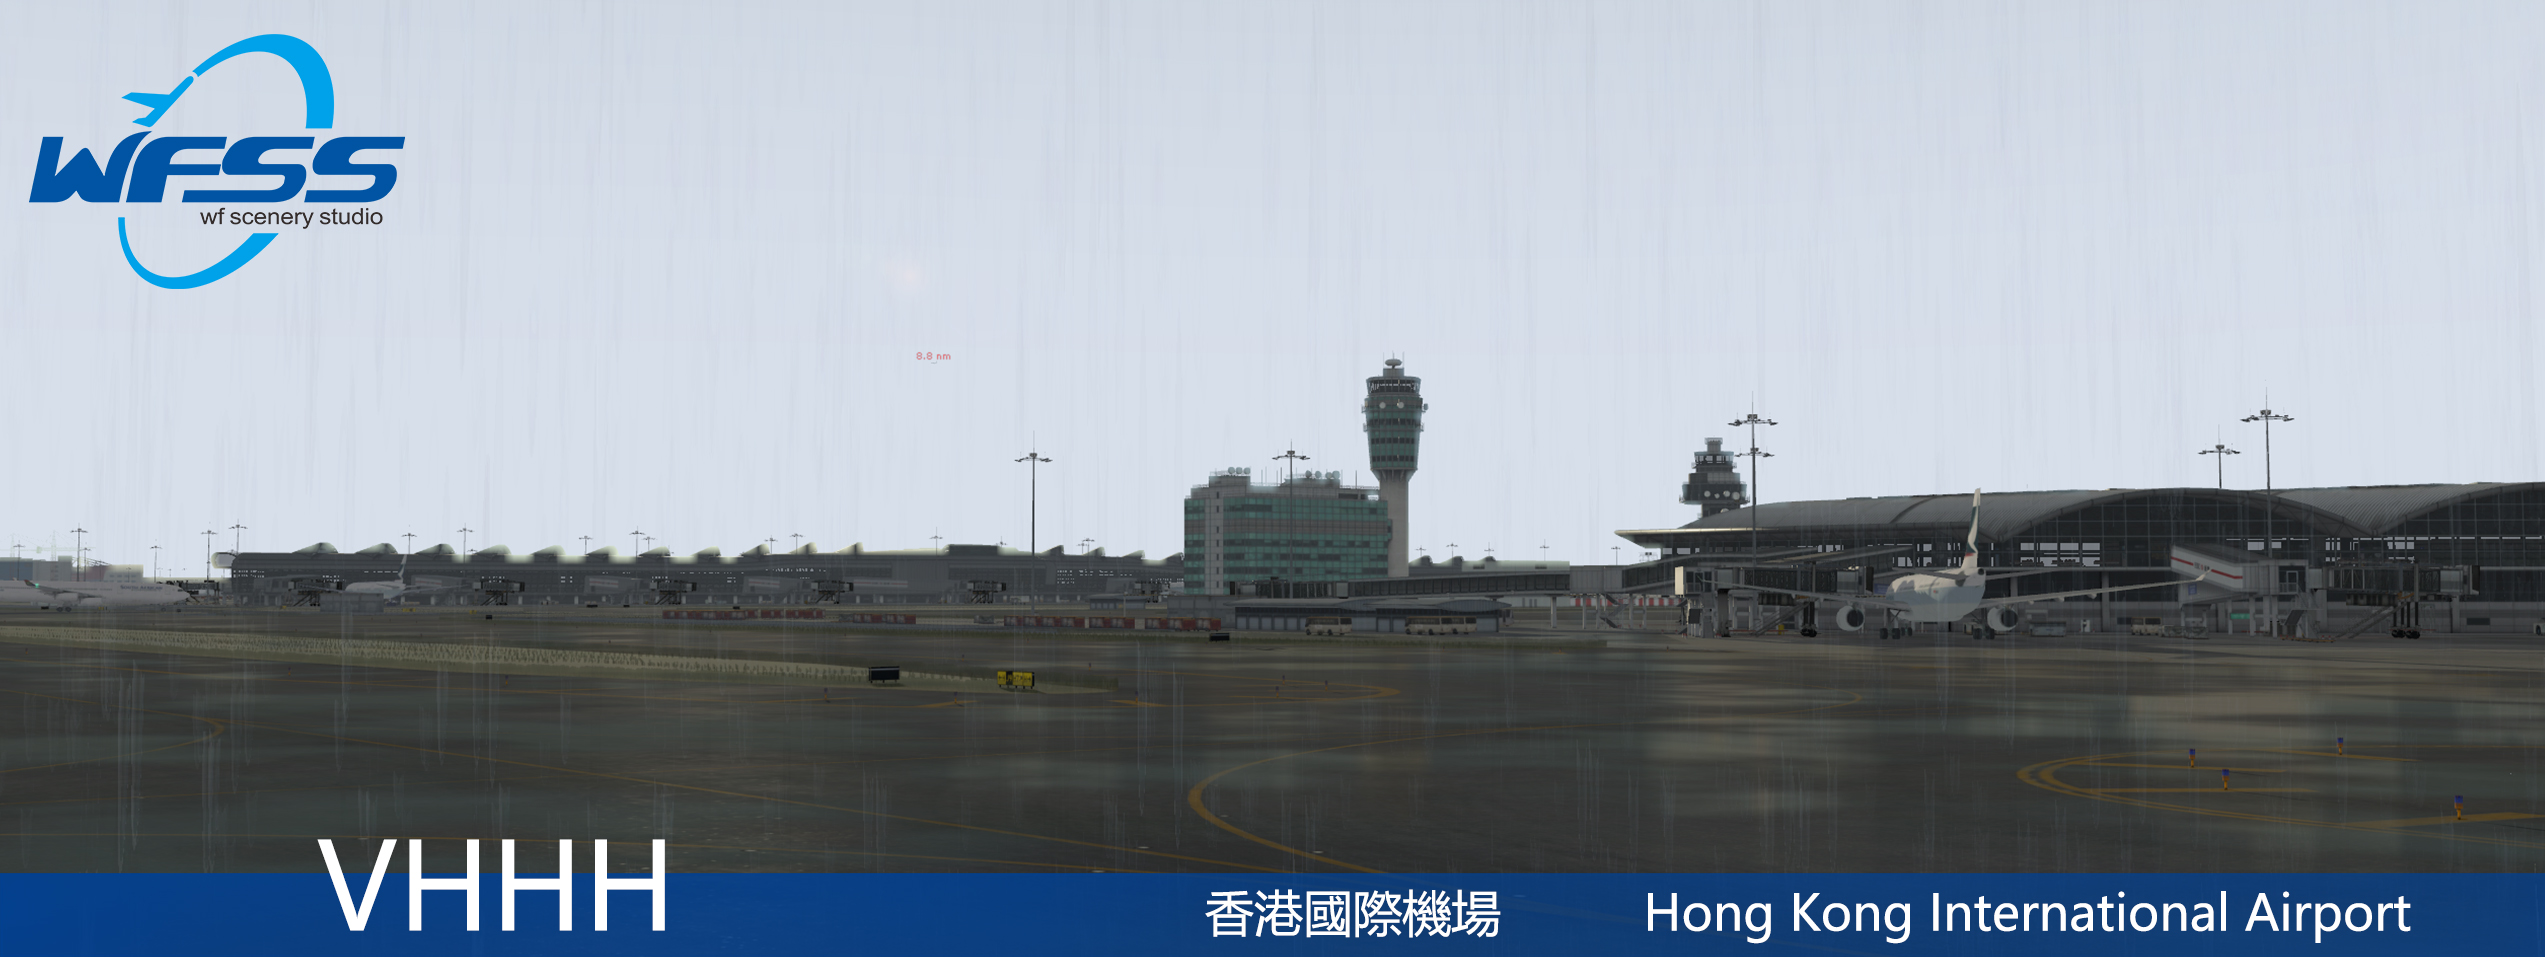 WFSS-香港国际机场发布-2155 